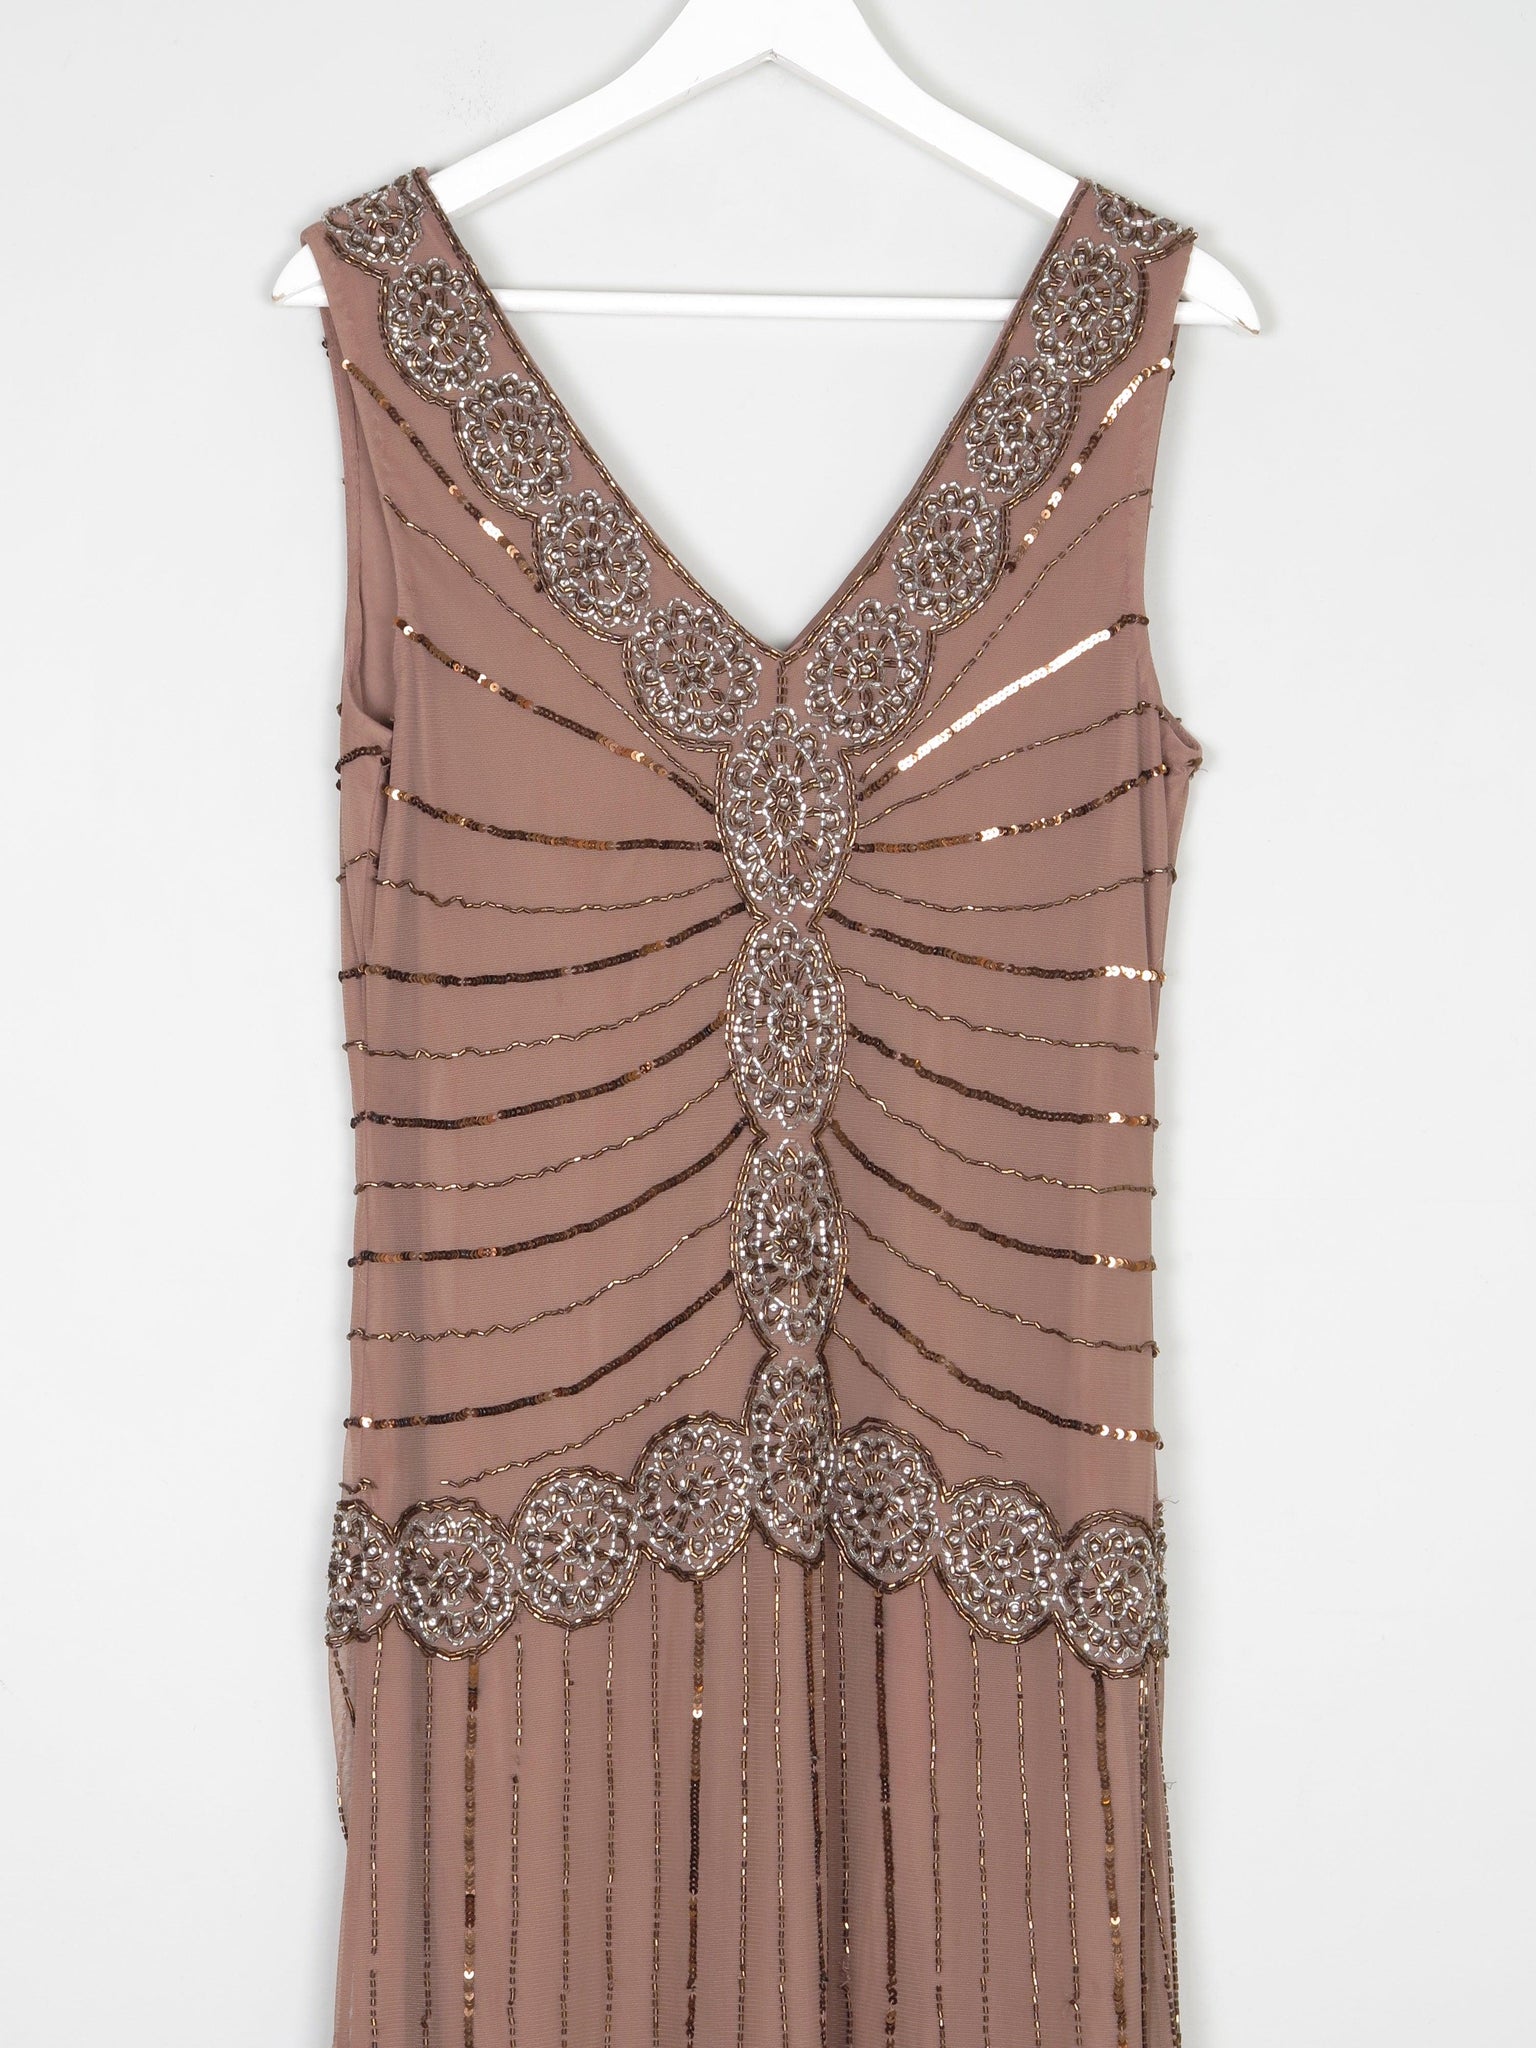 Mocha Beaded 1920s Flapper Style Dress L 14/16